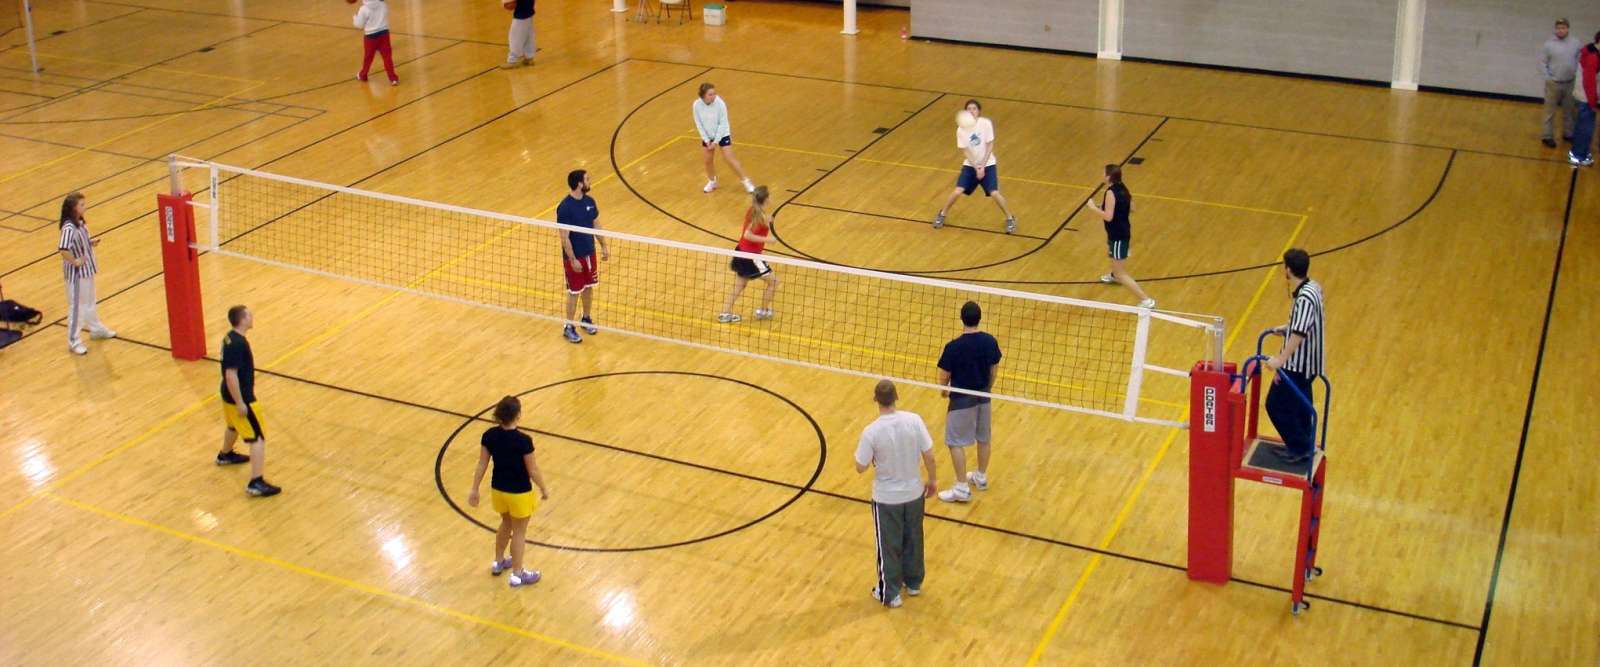 Recreational Sports: Indoor Volleyball